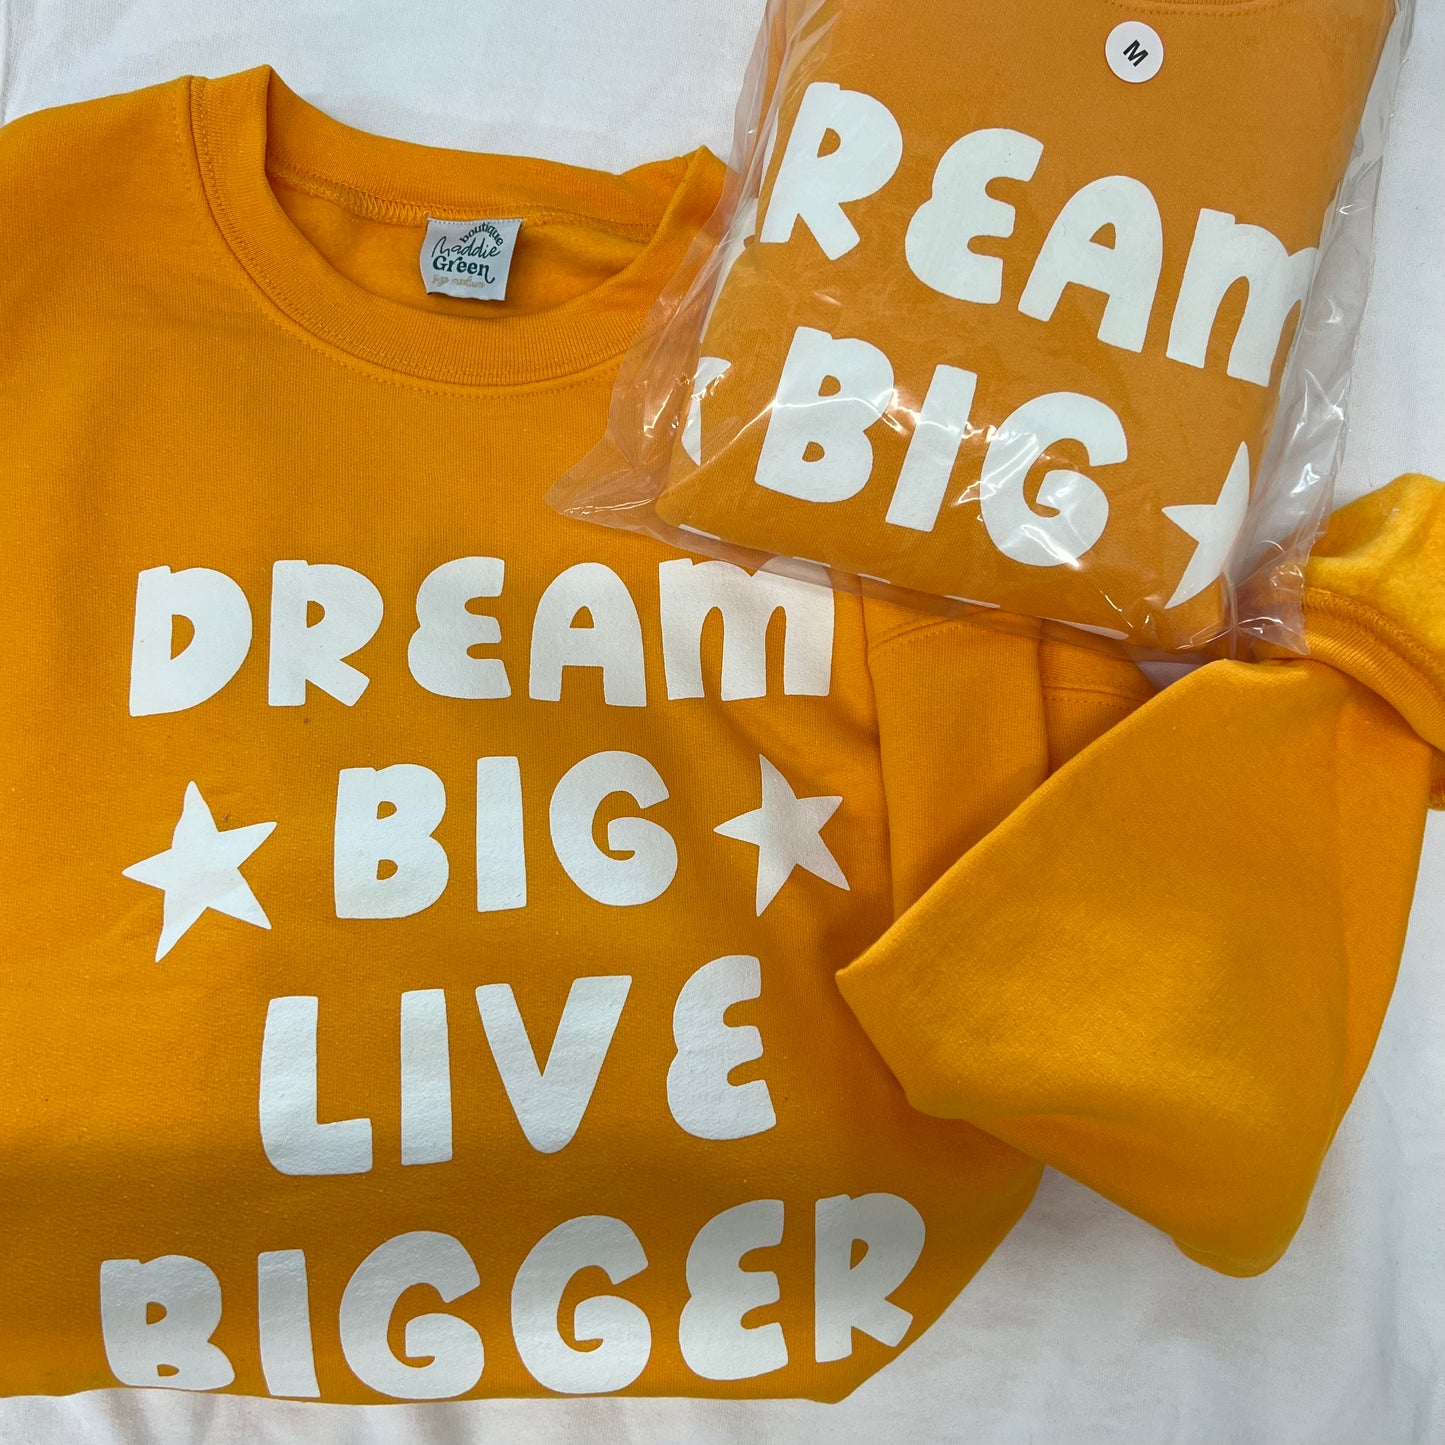 Retro Orange Dream Big Live Bigger Crewneck Sweatshirt